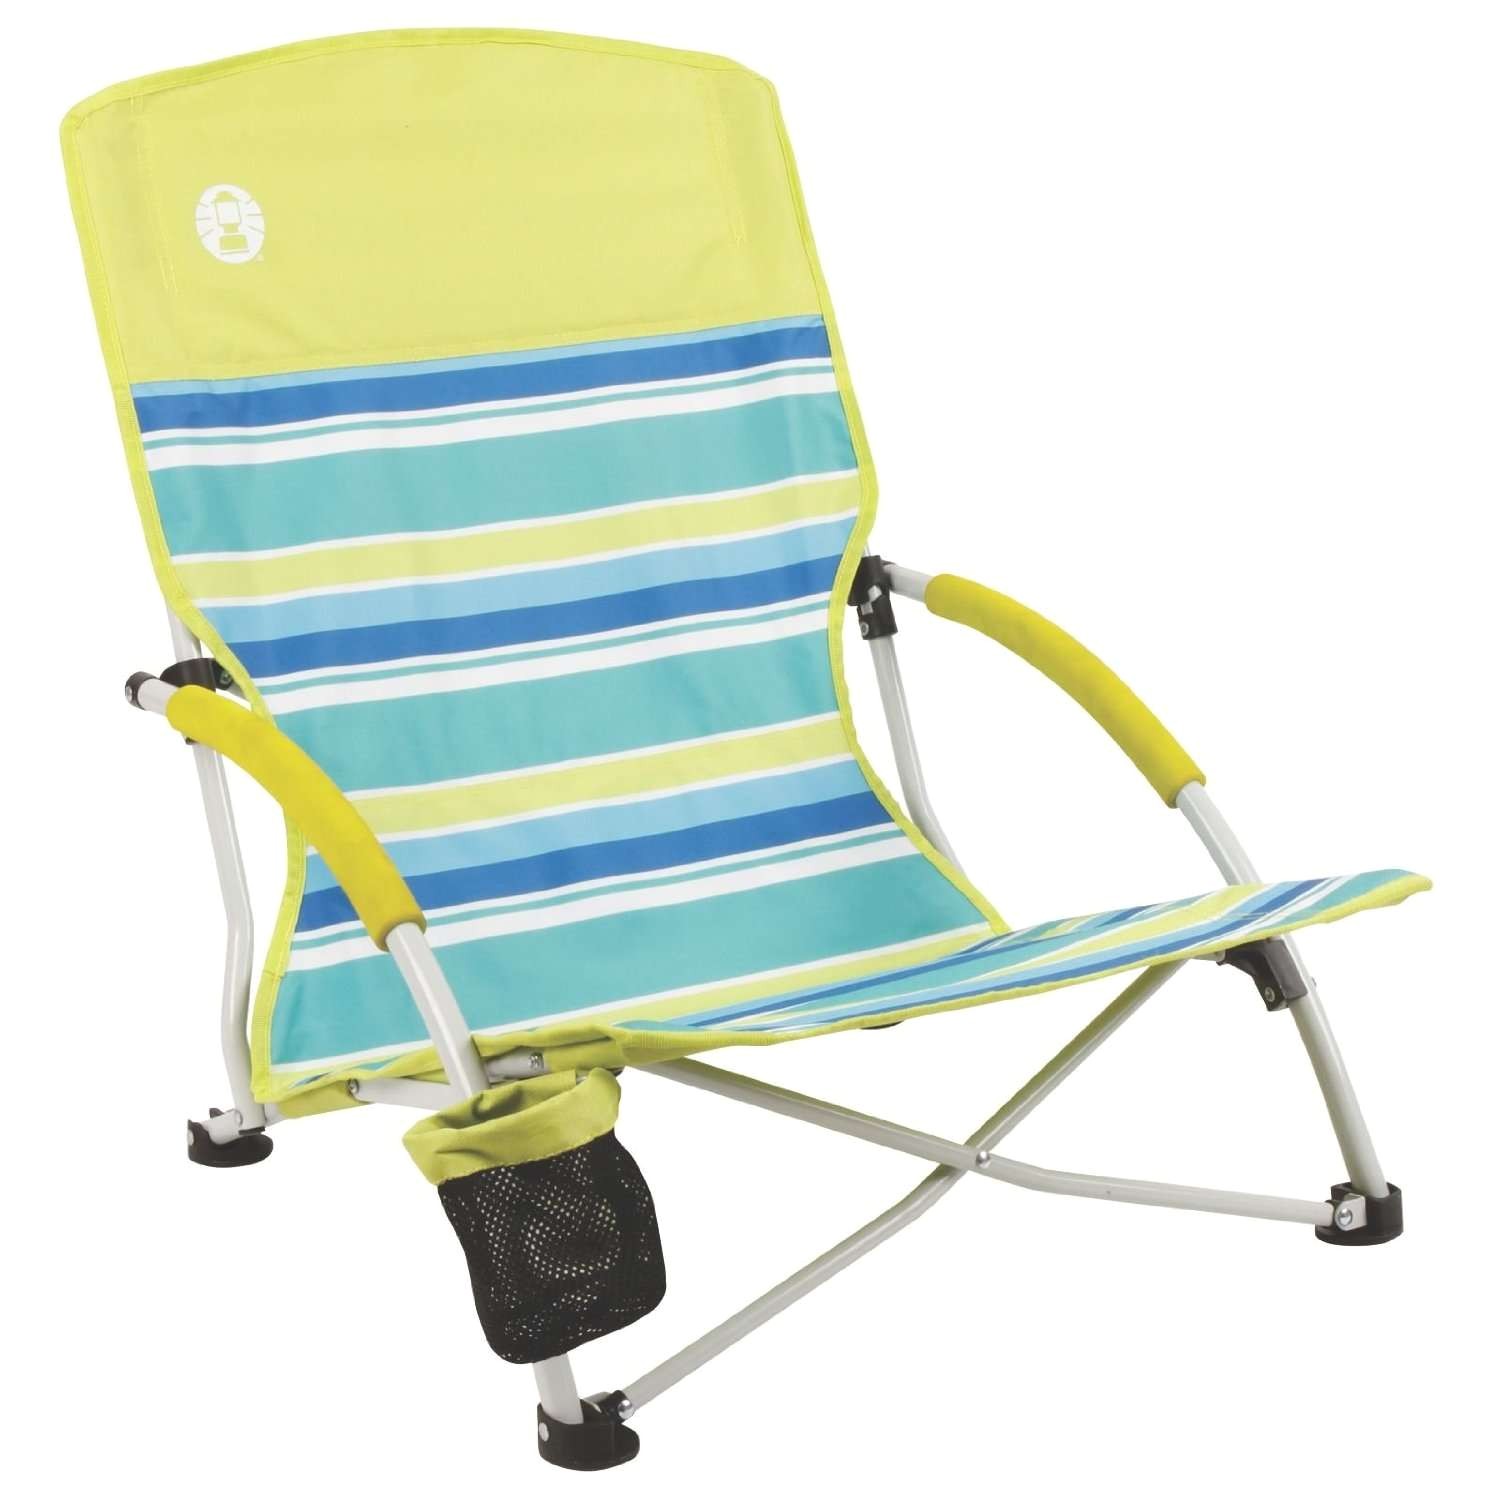 backpack beach chair target inspirational low folding beach chair unbelievable chair ideas